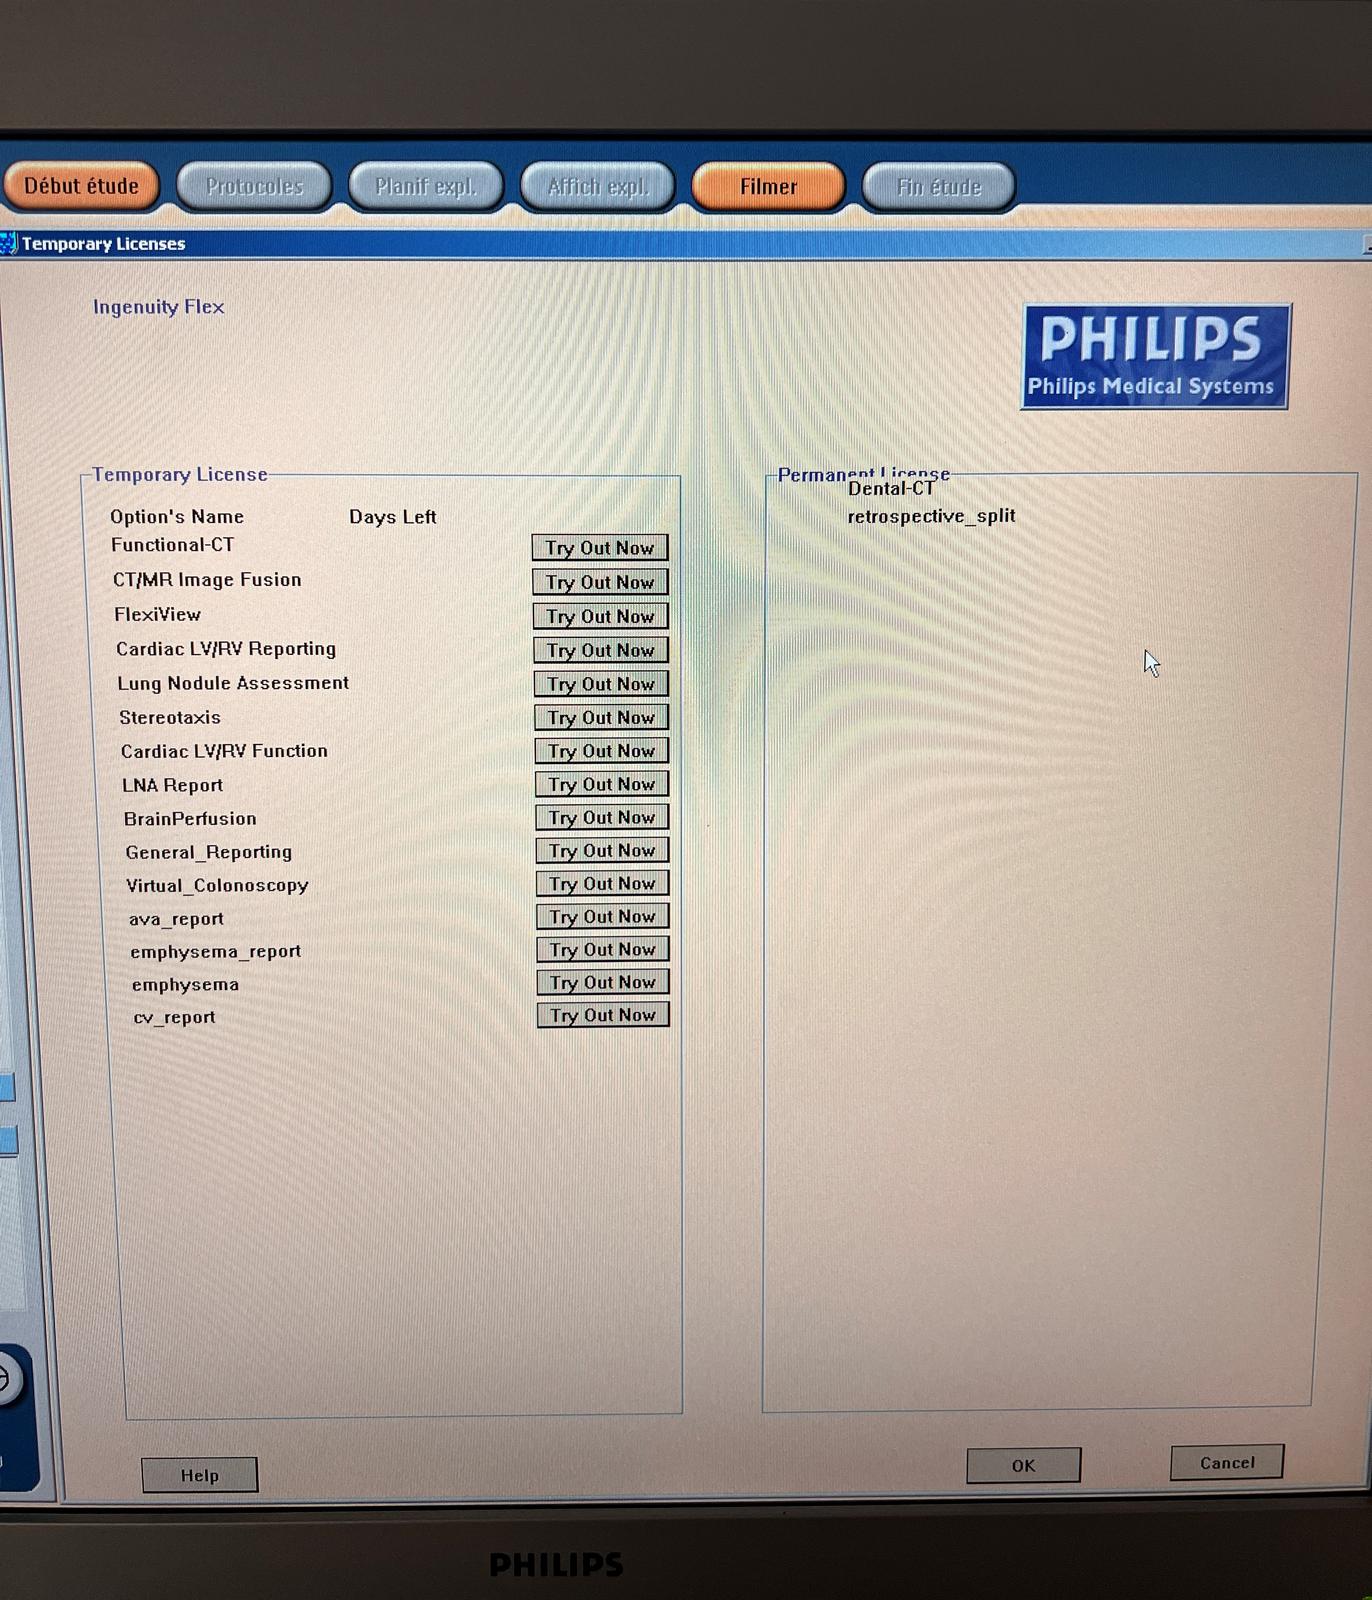 Philips Ingenuity Flex 16 - 2014